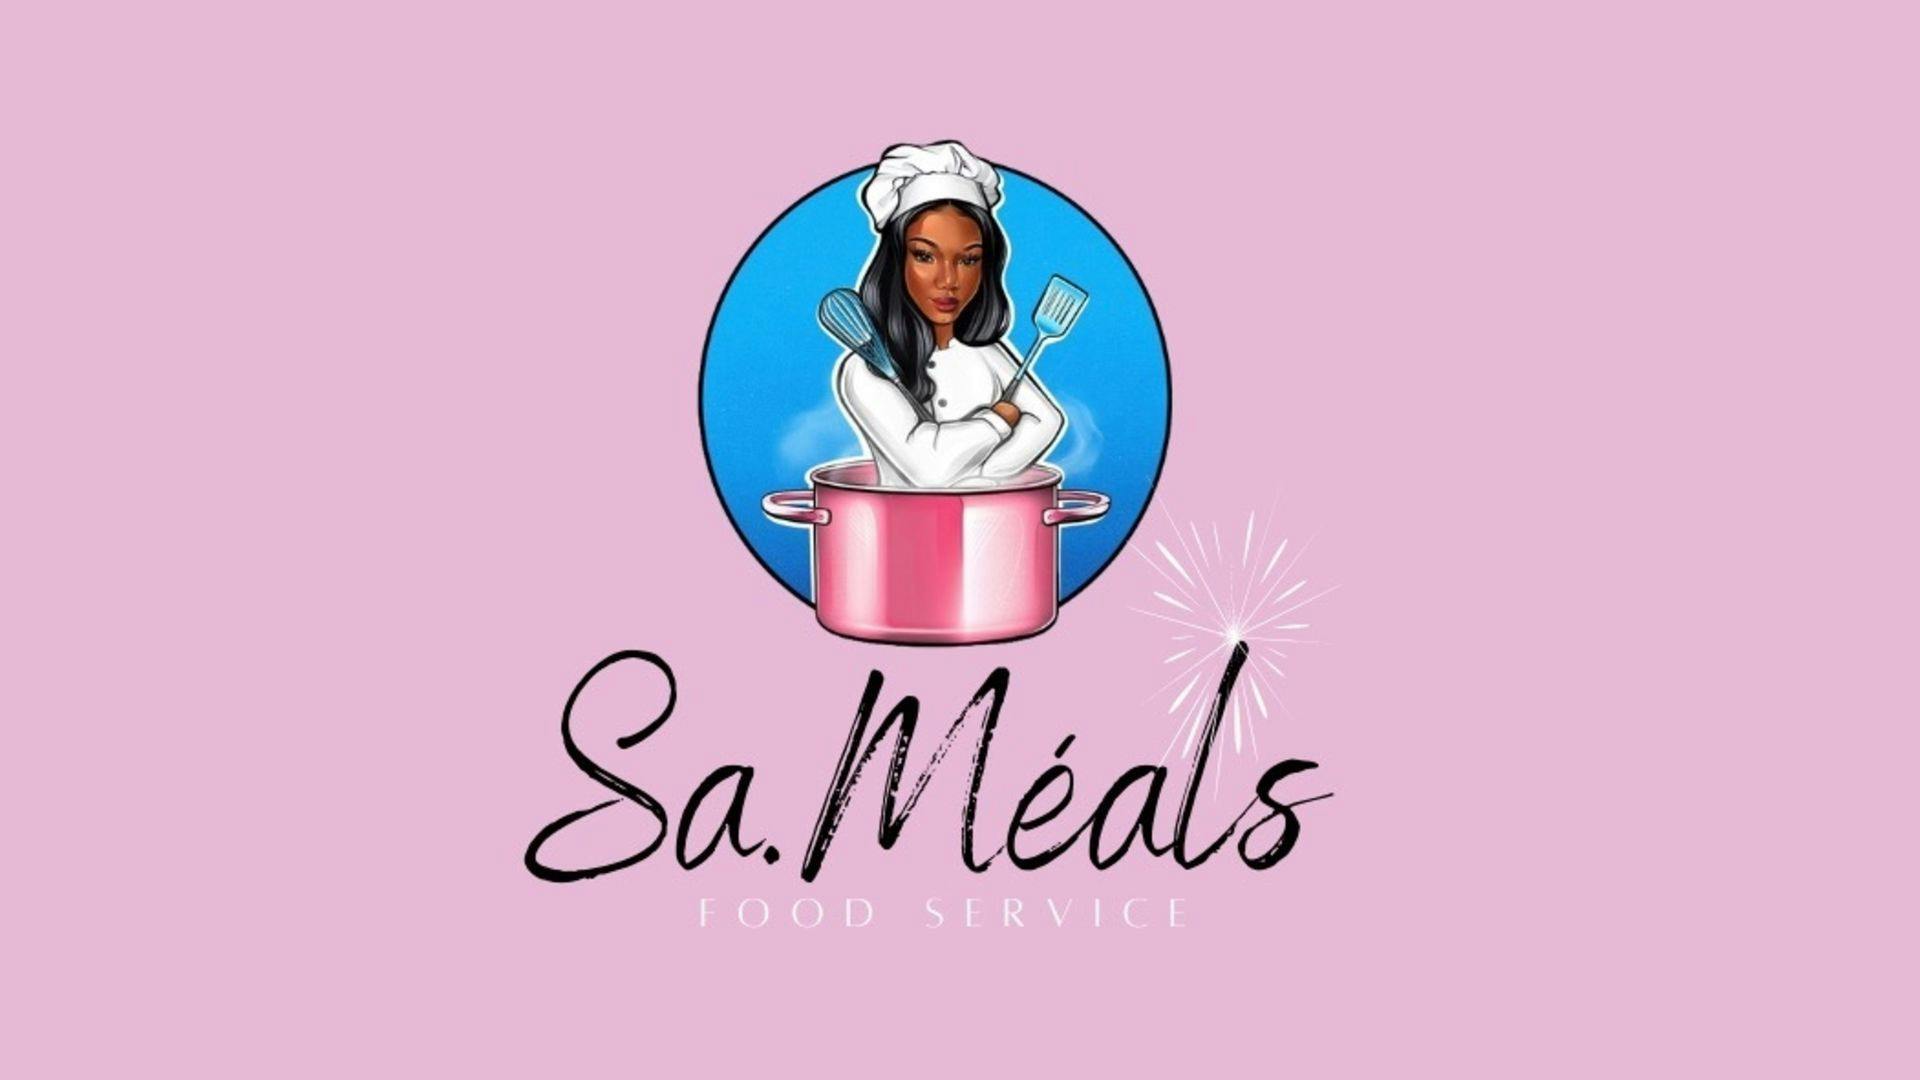 Sa Meals cover image